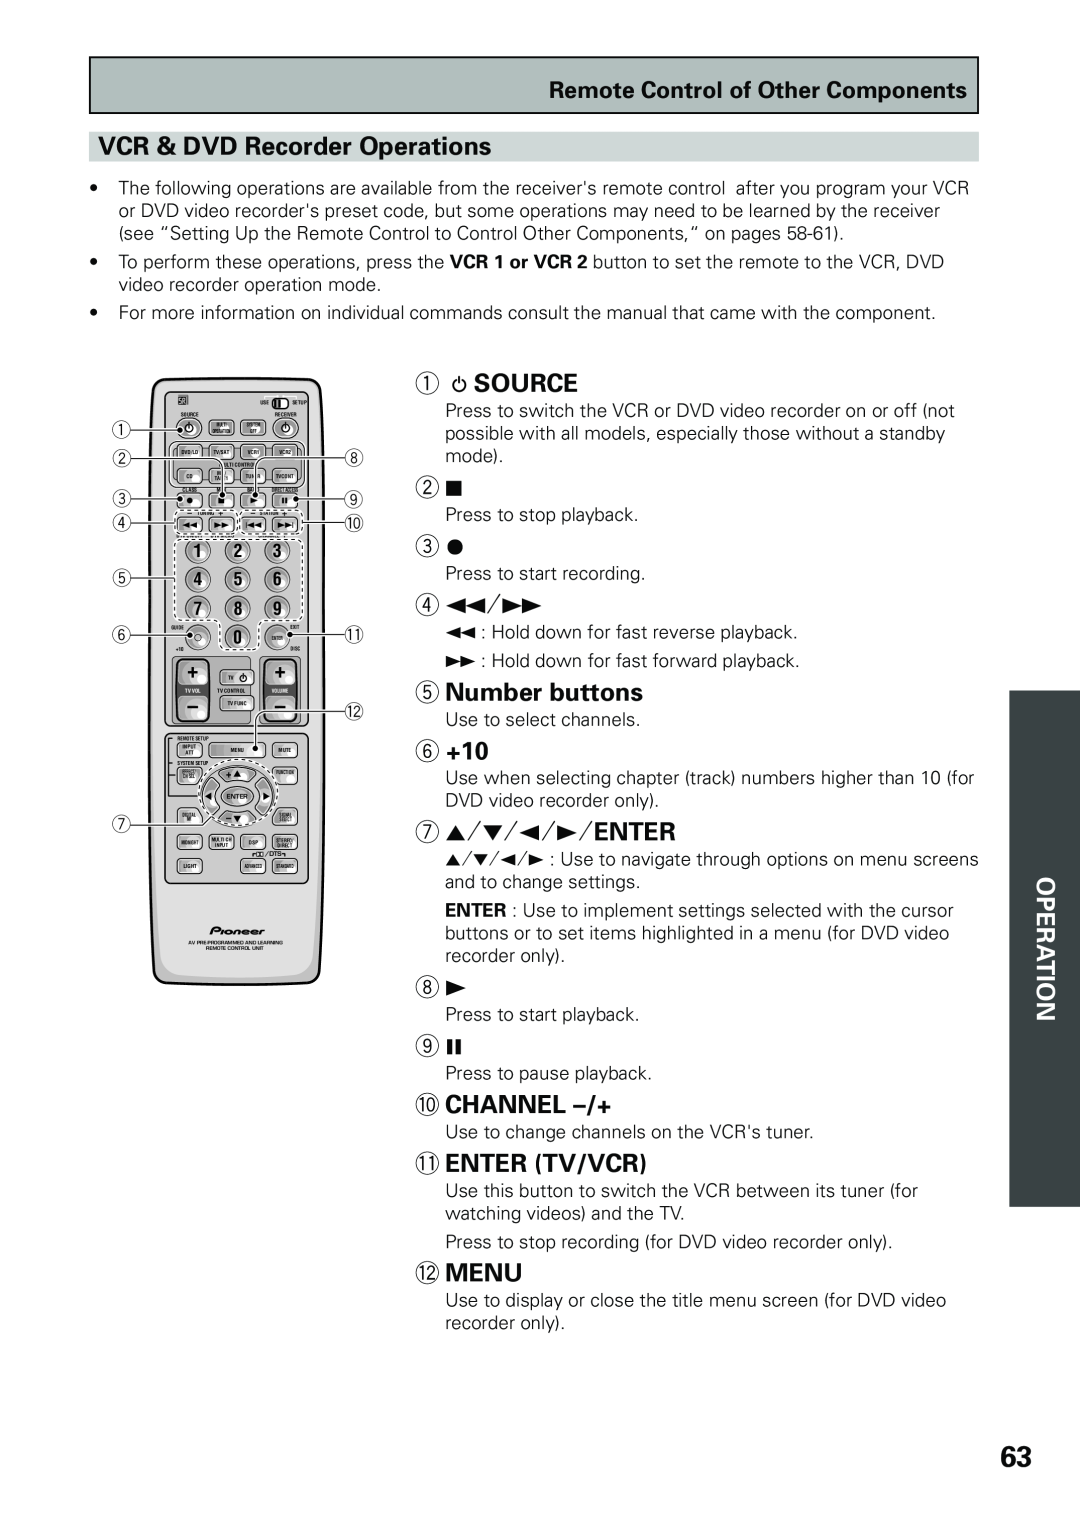 Pioneer VSX-D909S VCR & DVD Recorder Operations, 1SOURCE, 6+10, 75÷÷2÷3÷ENTER, 0CHANNEL –/+, Enter Tv/Vcr, 4 1÷Á, =Menu 